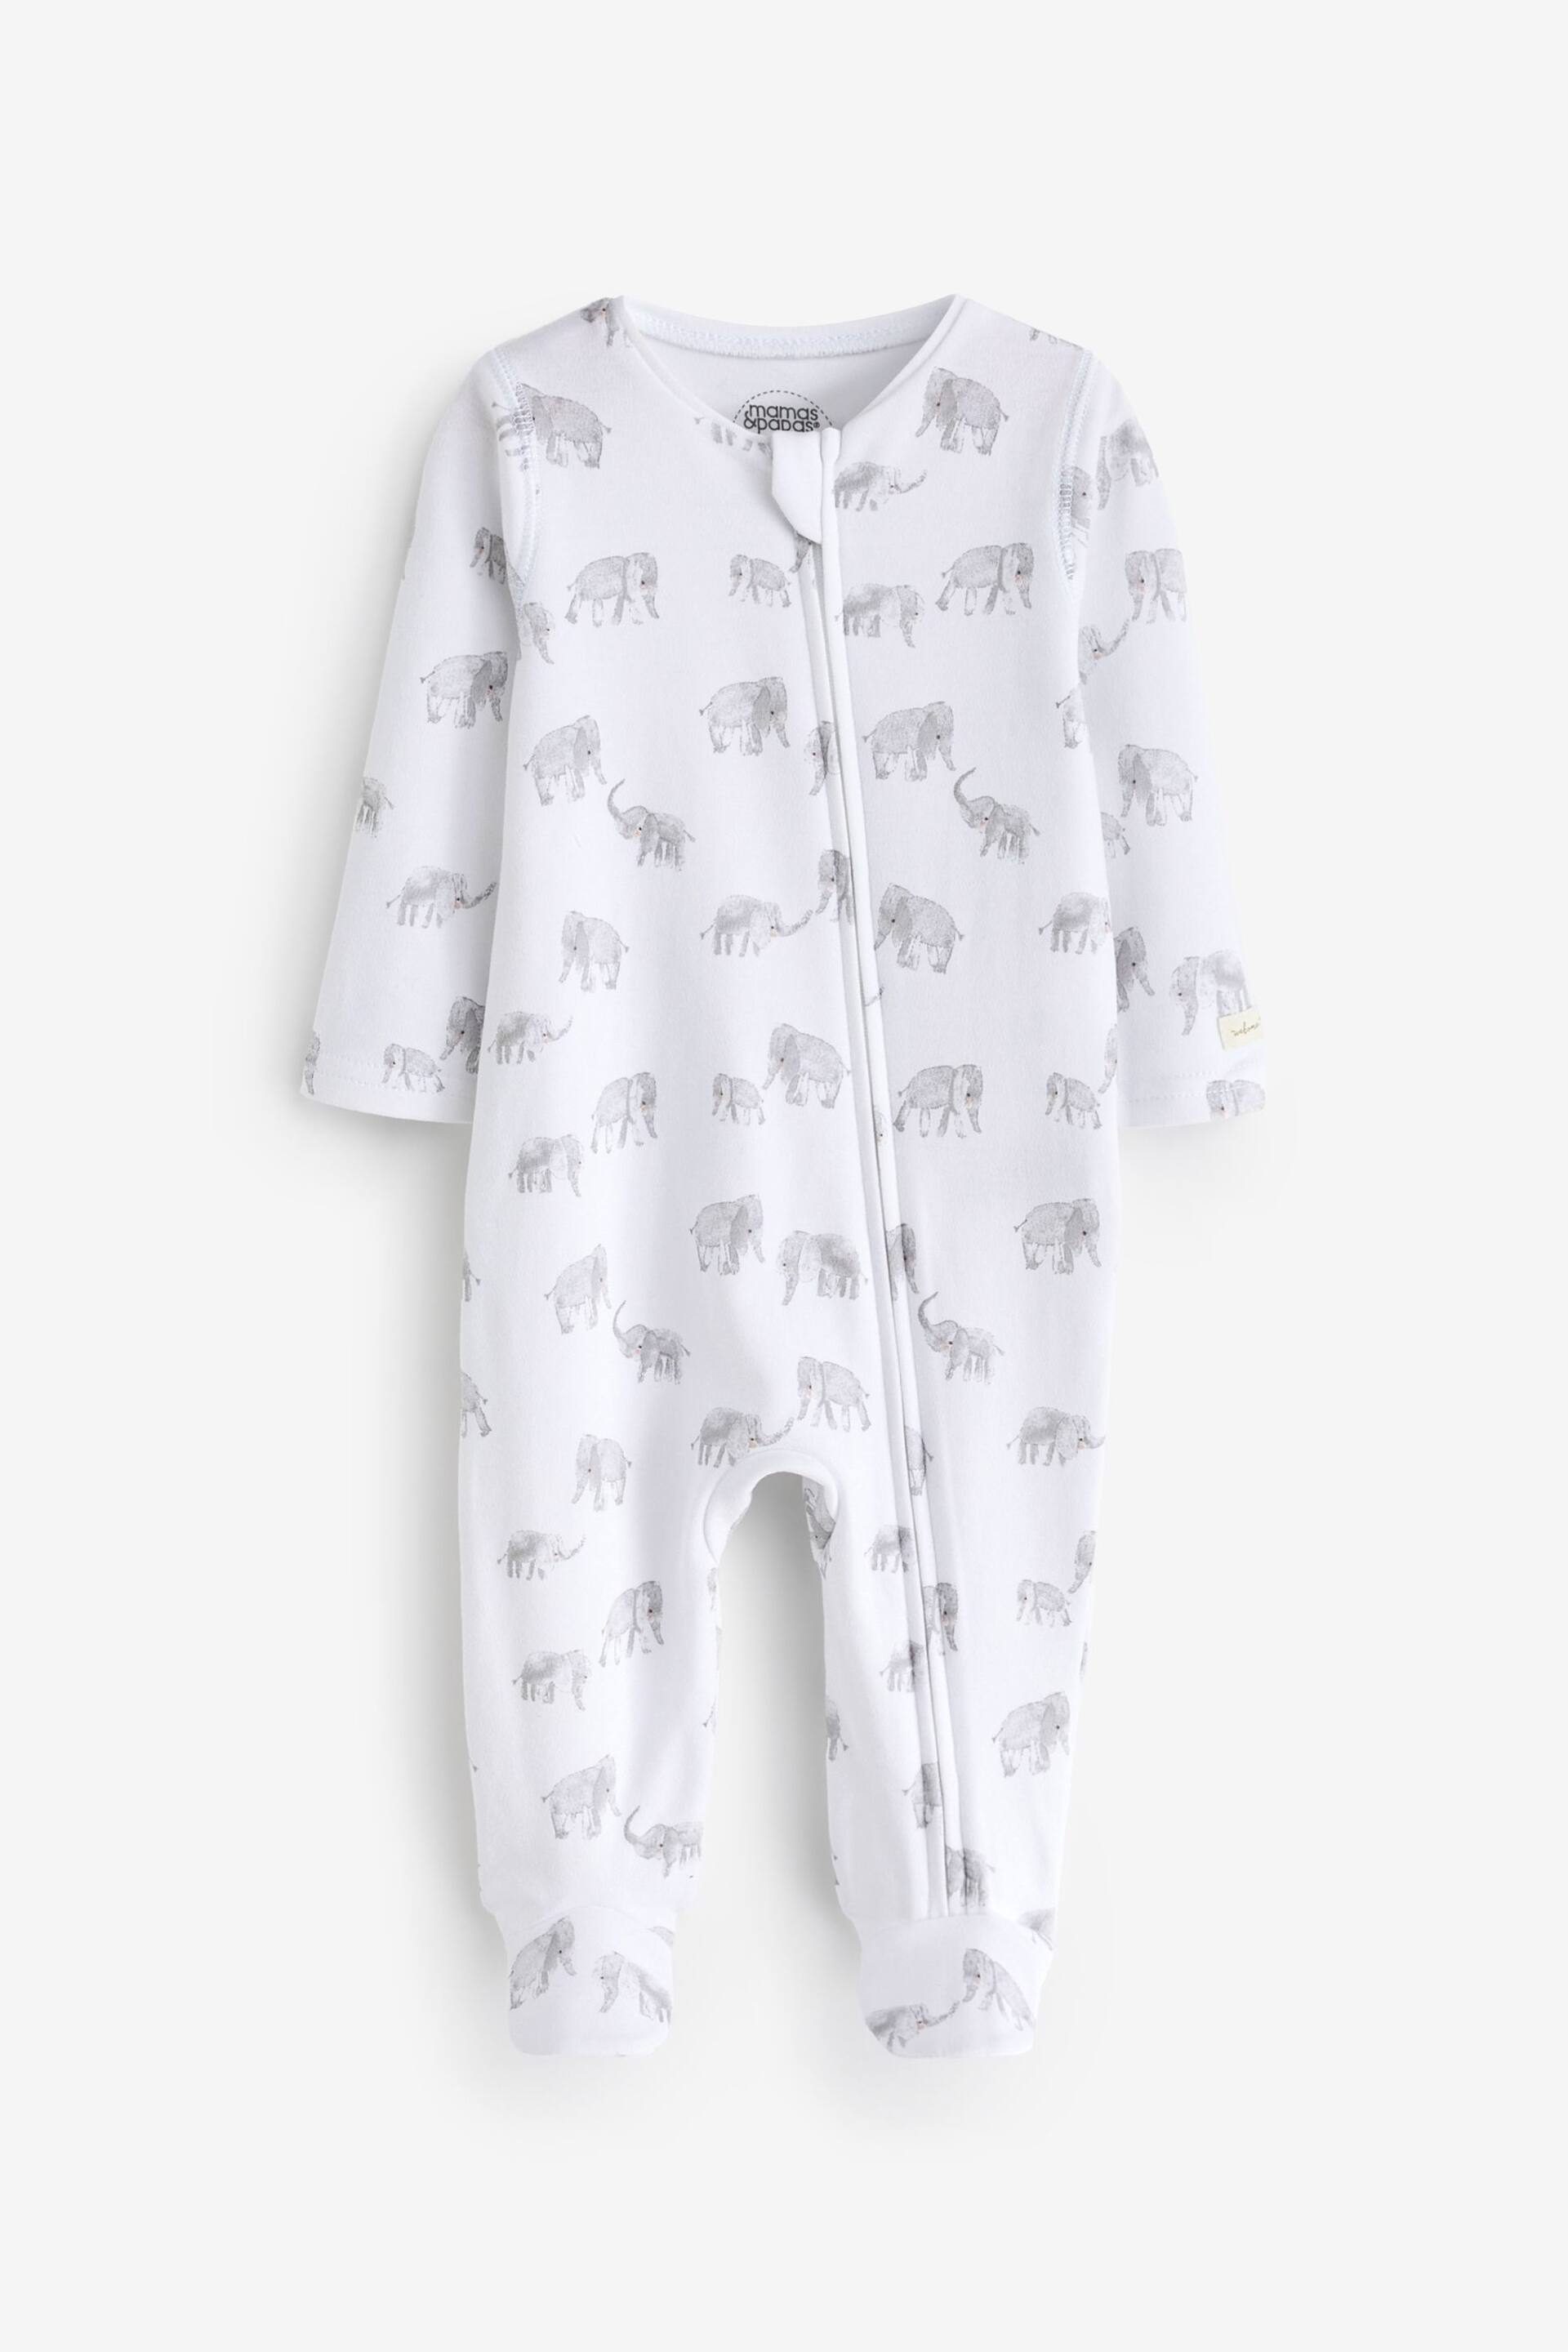 Mamas & Papas Elephant Print Sleepsuit - Image 2 of 3